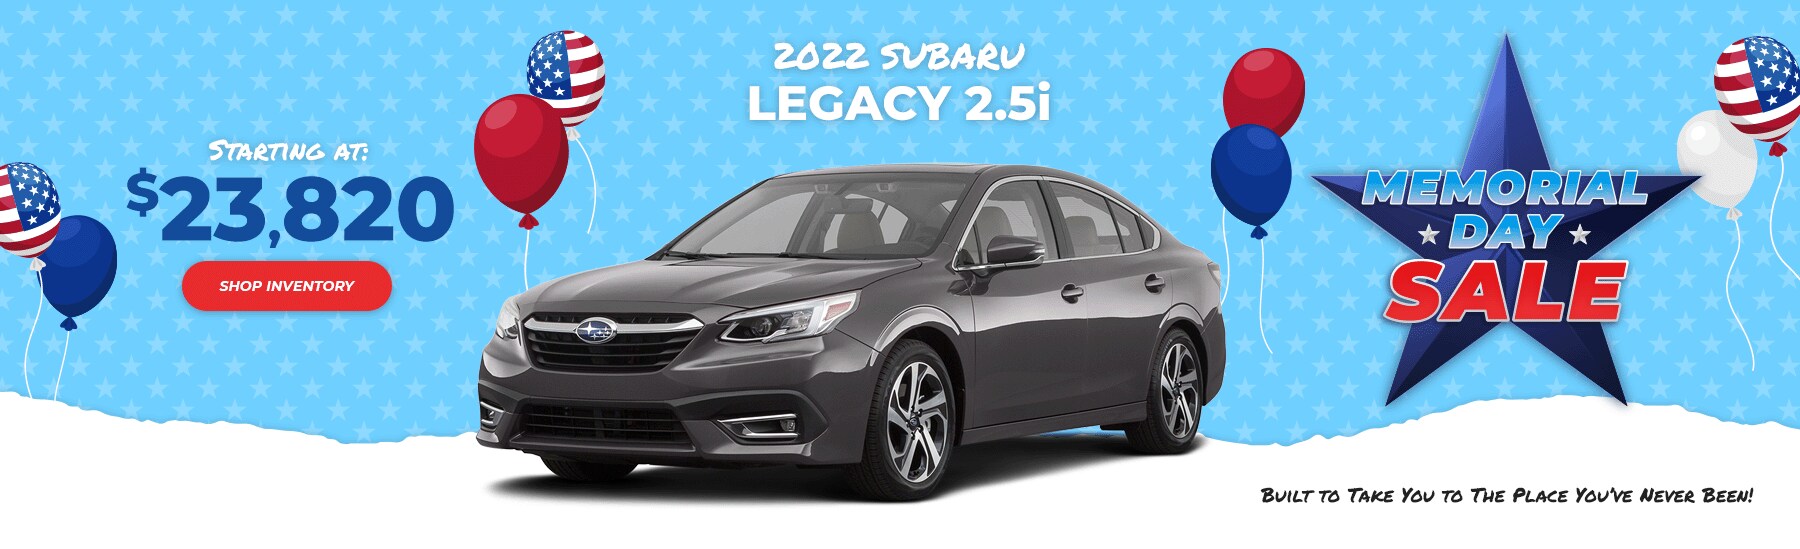 2022 Subaru Legacy 2.5i